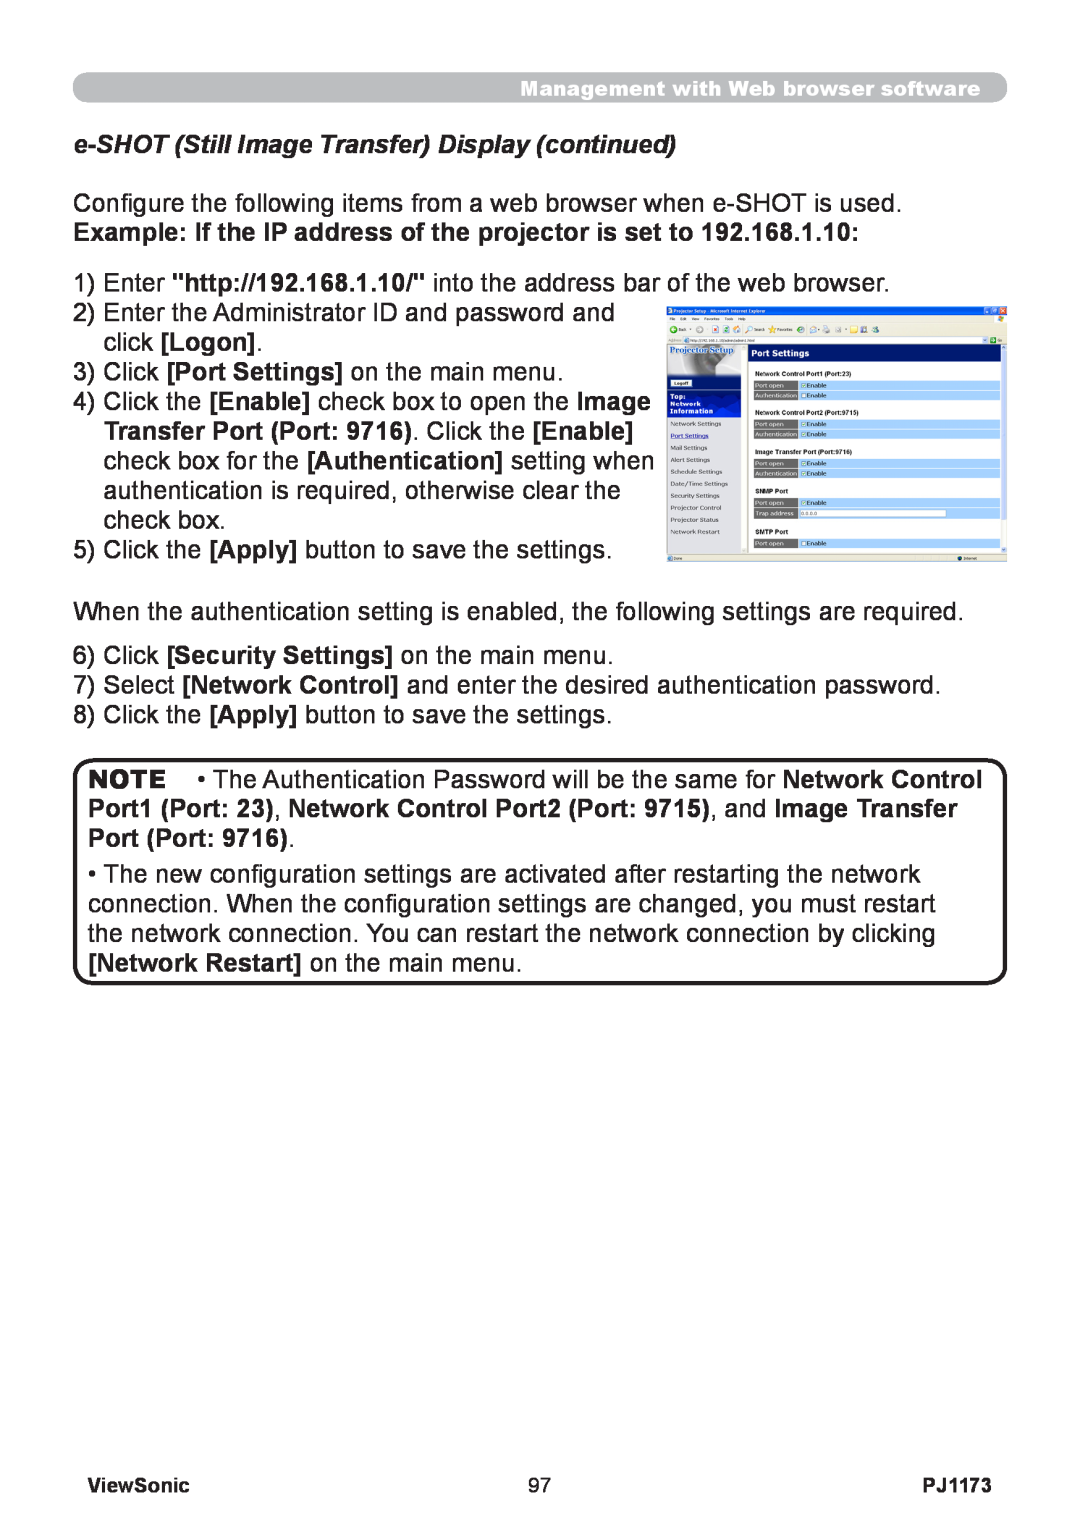 ViewSonic VS12109, PJ1173 warranty e-SHOTStill Image Transfer Display continued, Network Restart on the main menu 